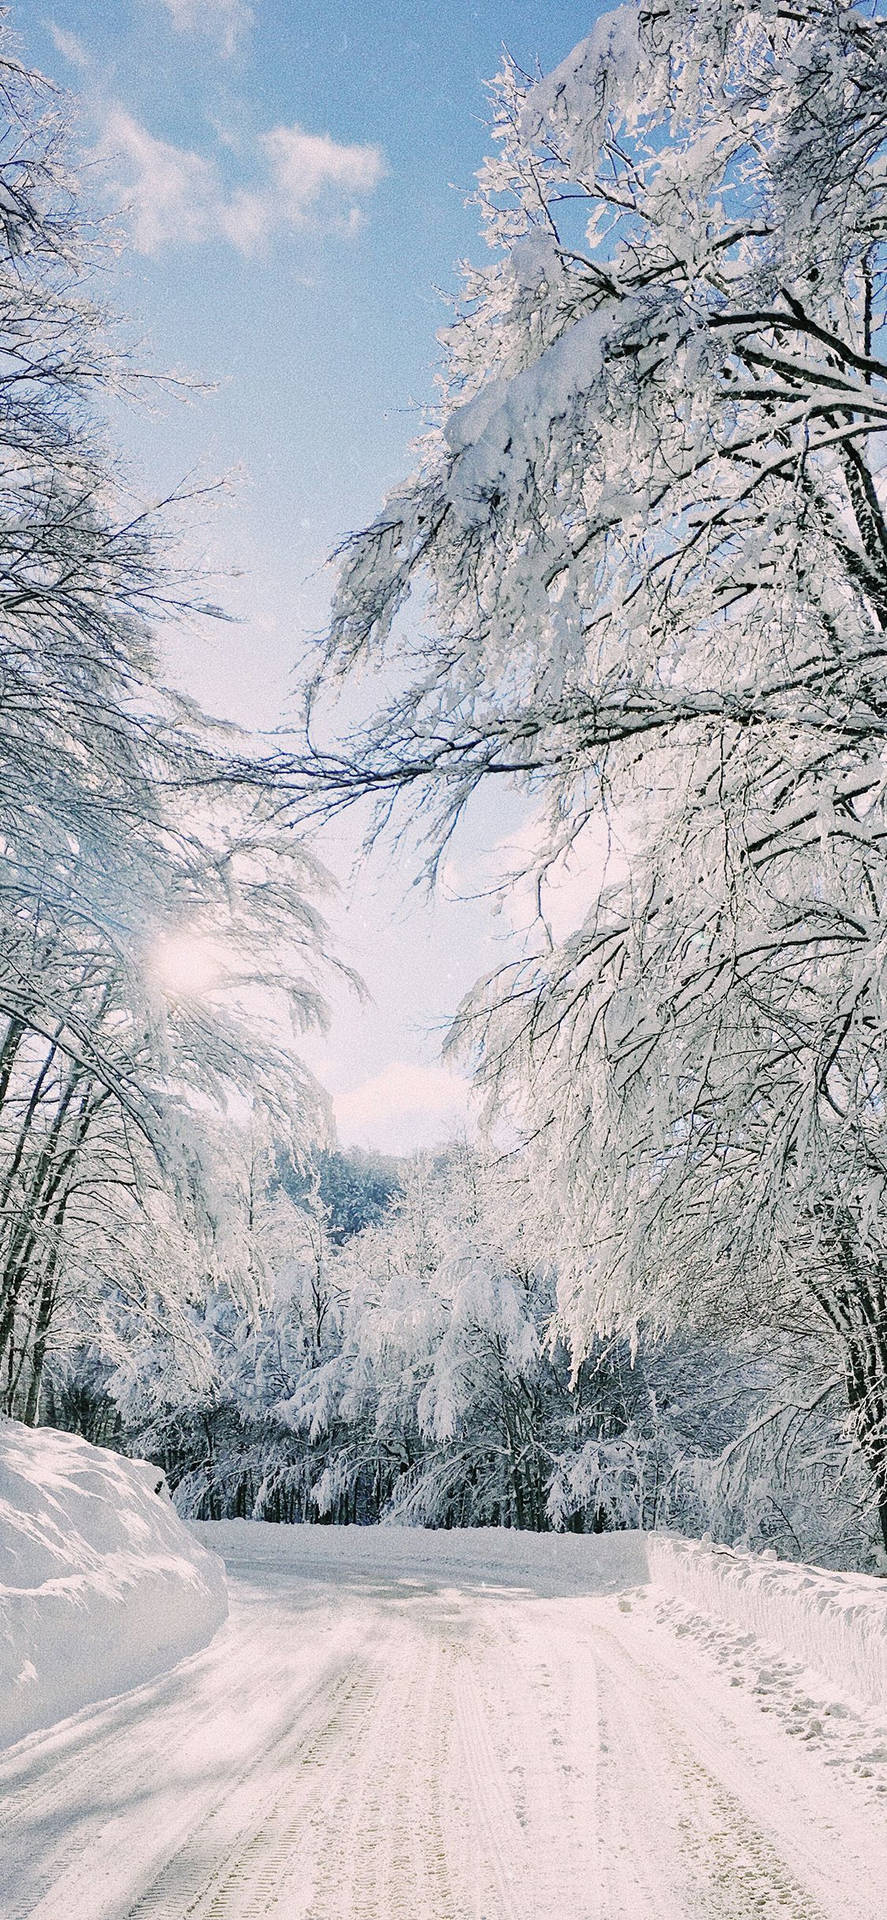 Snowy Road Winter iPhone Wallpaper